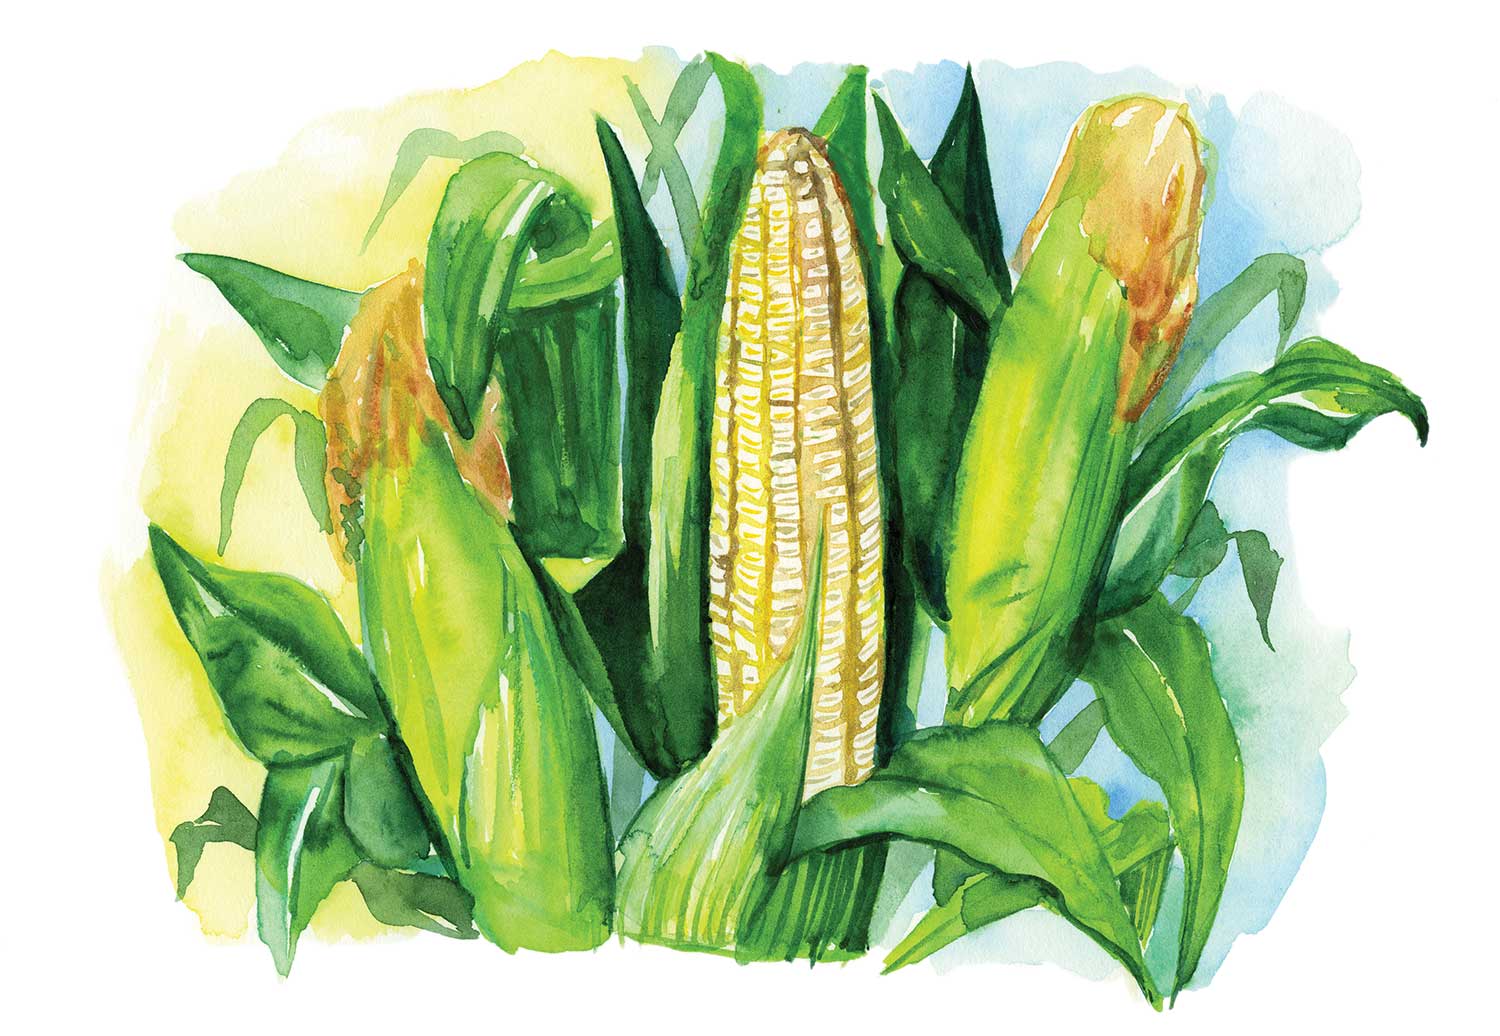 An illustration of Cocke’s Prolific white dent corn